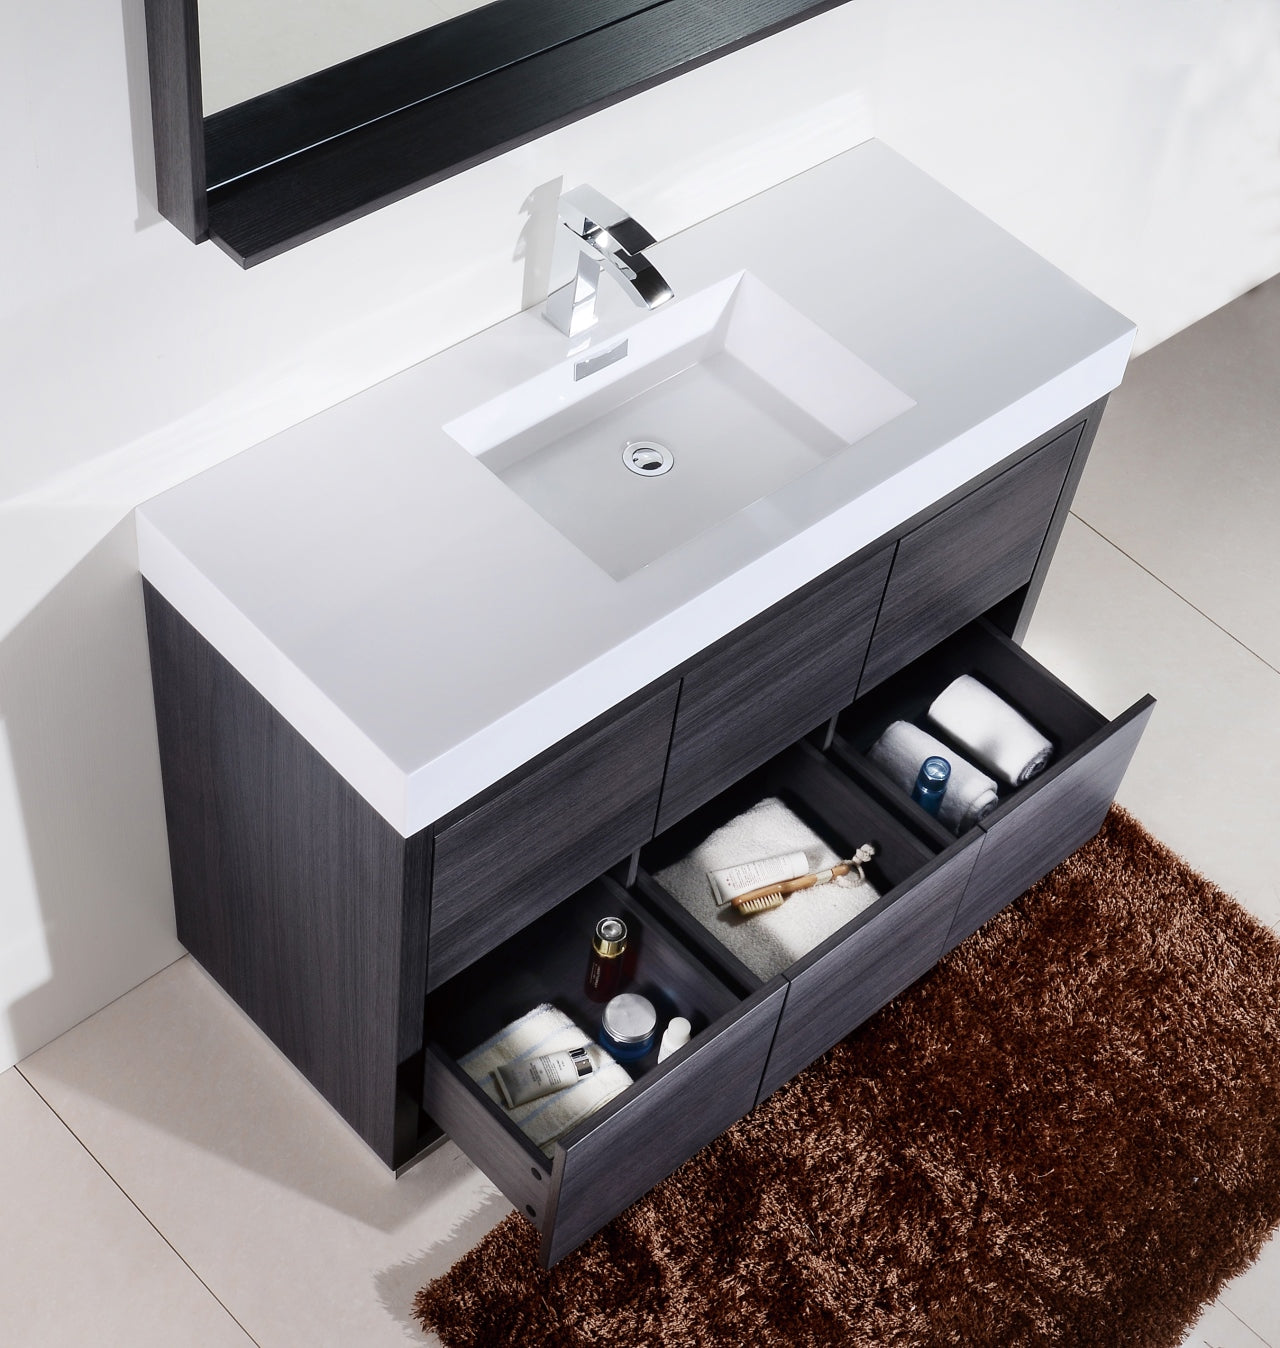 Bliss 48″ Gray Oak Free Standing Modern Bathroom Vanity